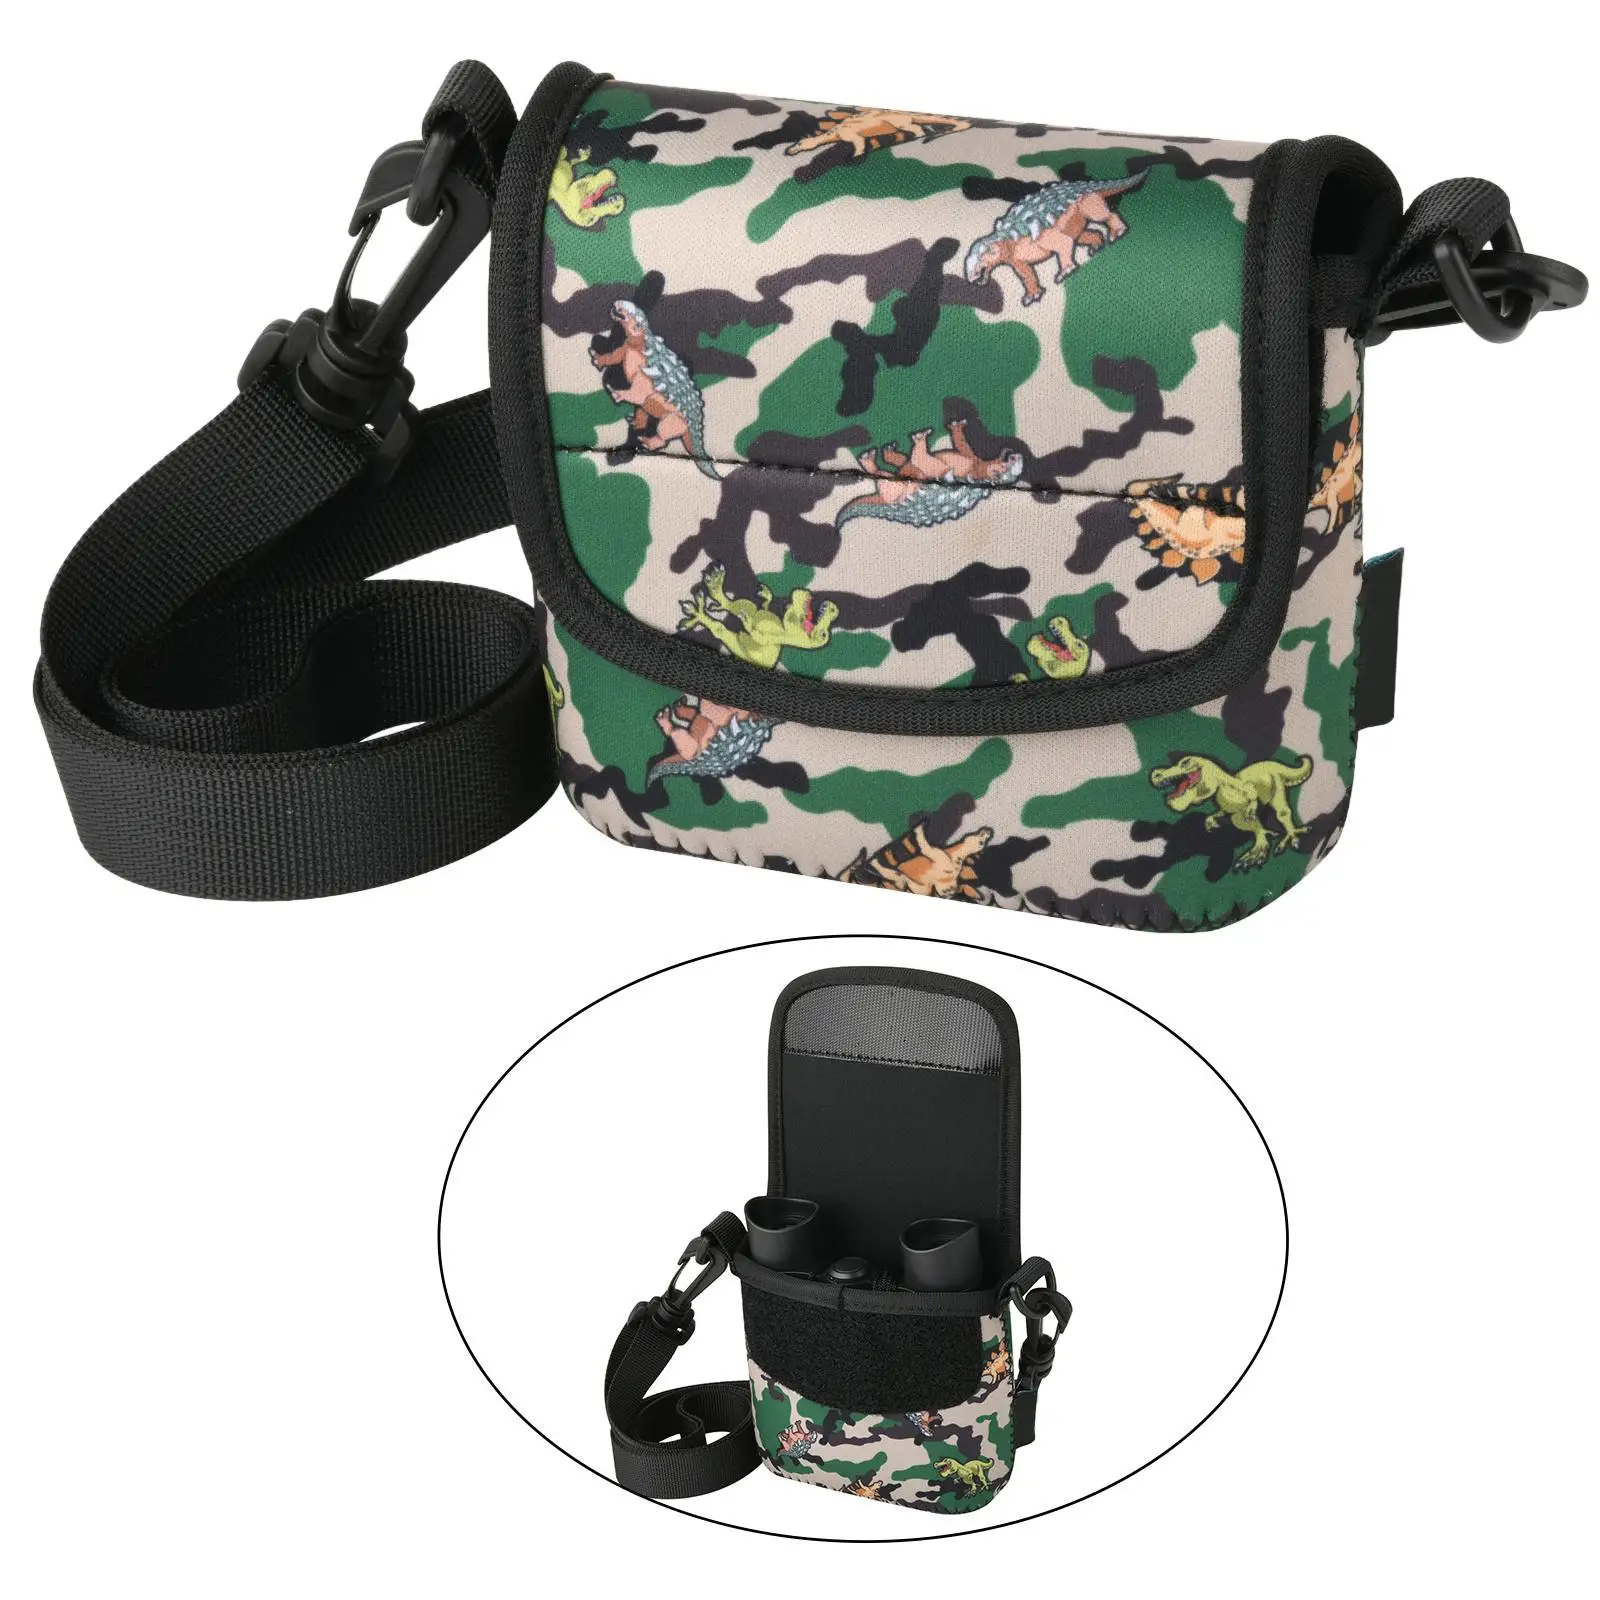 Kids Binoculars Carry Bag Large Capacity Outdoor for Eyepiece Snacks Cameras